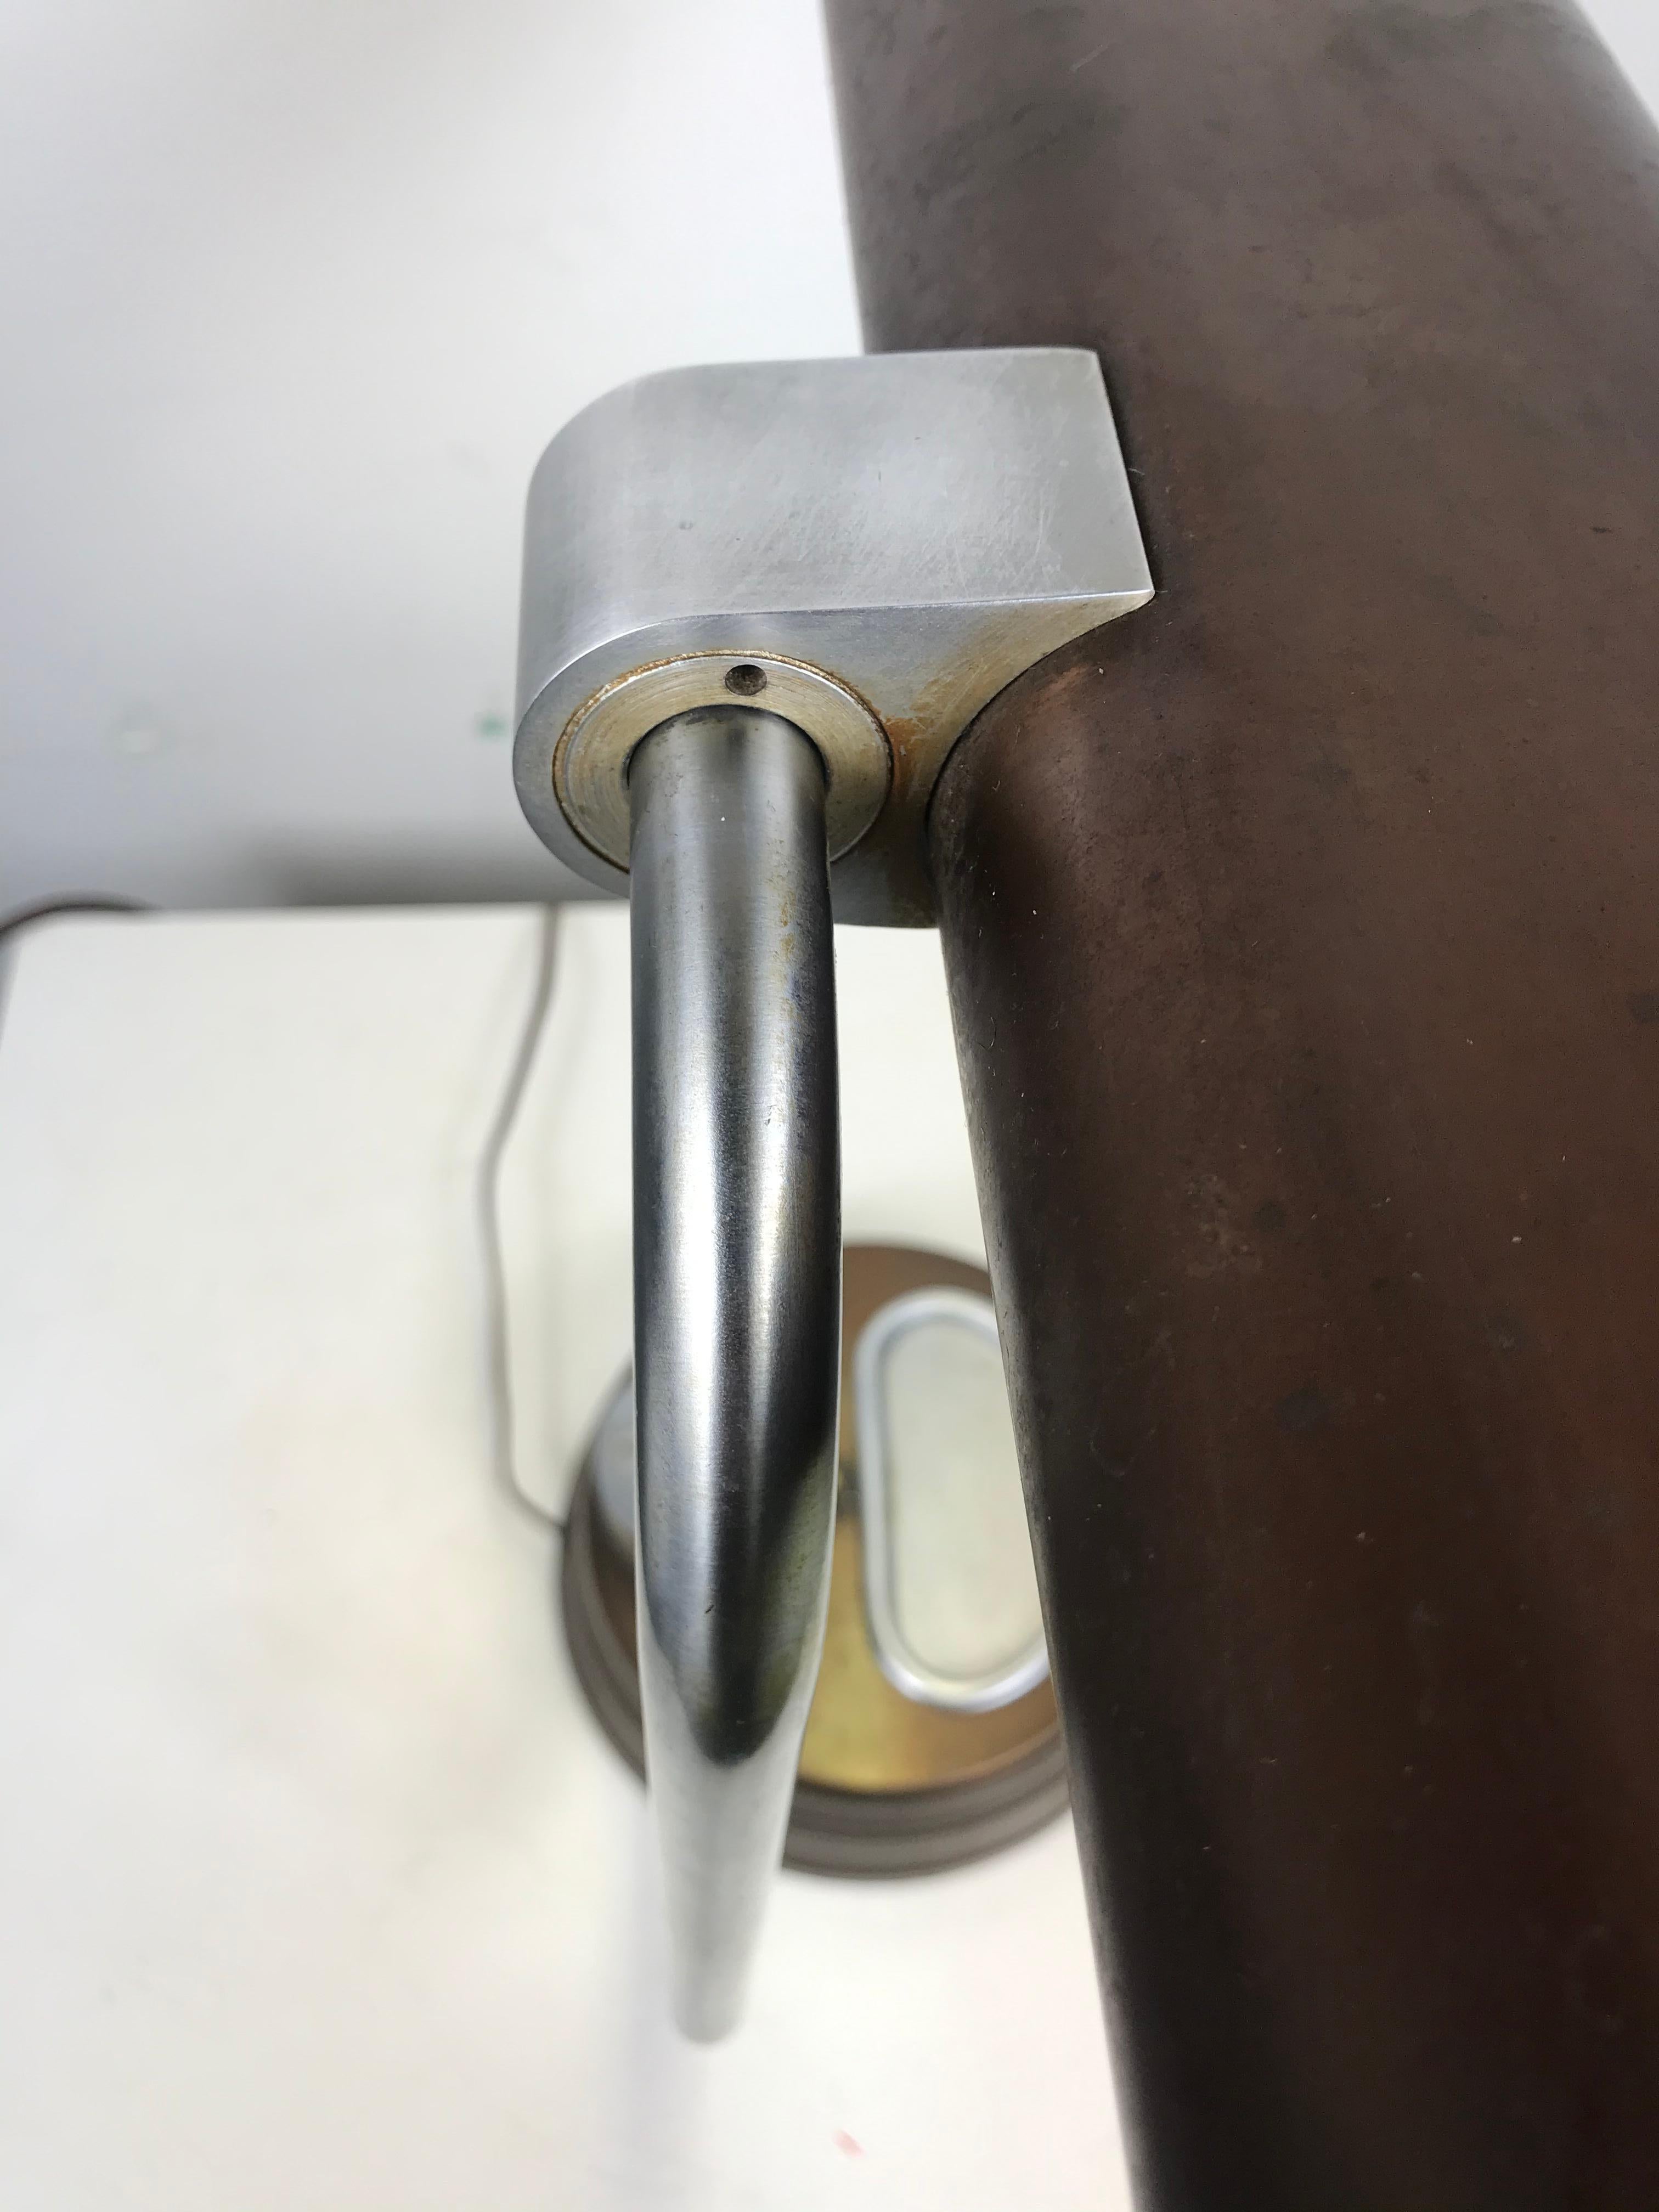 Unusual modernist, machine age stainless steel / metal industrial desk lamp, circa 1930s, reminiscent of glorious designs of Gilbert Rhode, KEM Weber. Warren McArthur etc. Beautiful machined construction, industrial yet elegant design, adjustable